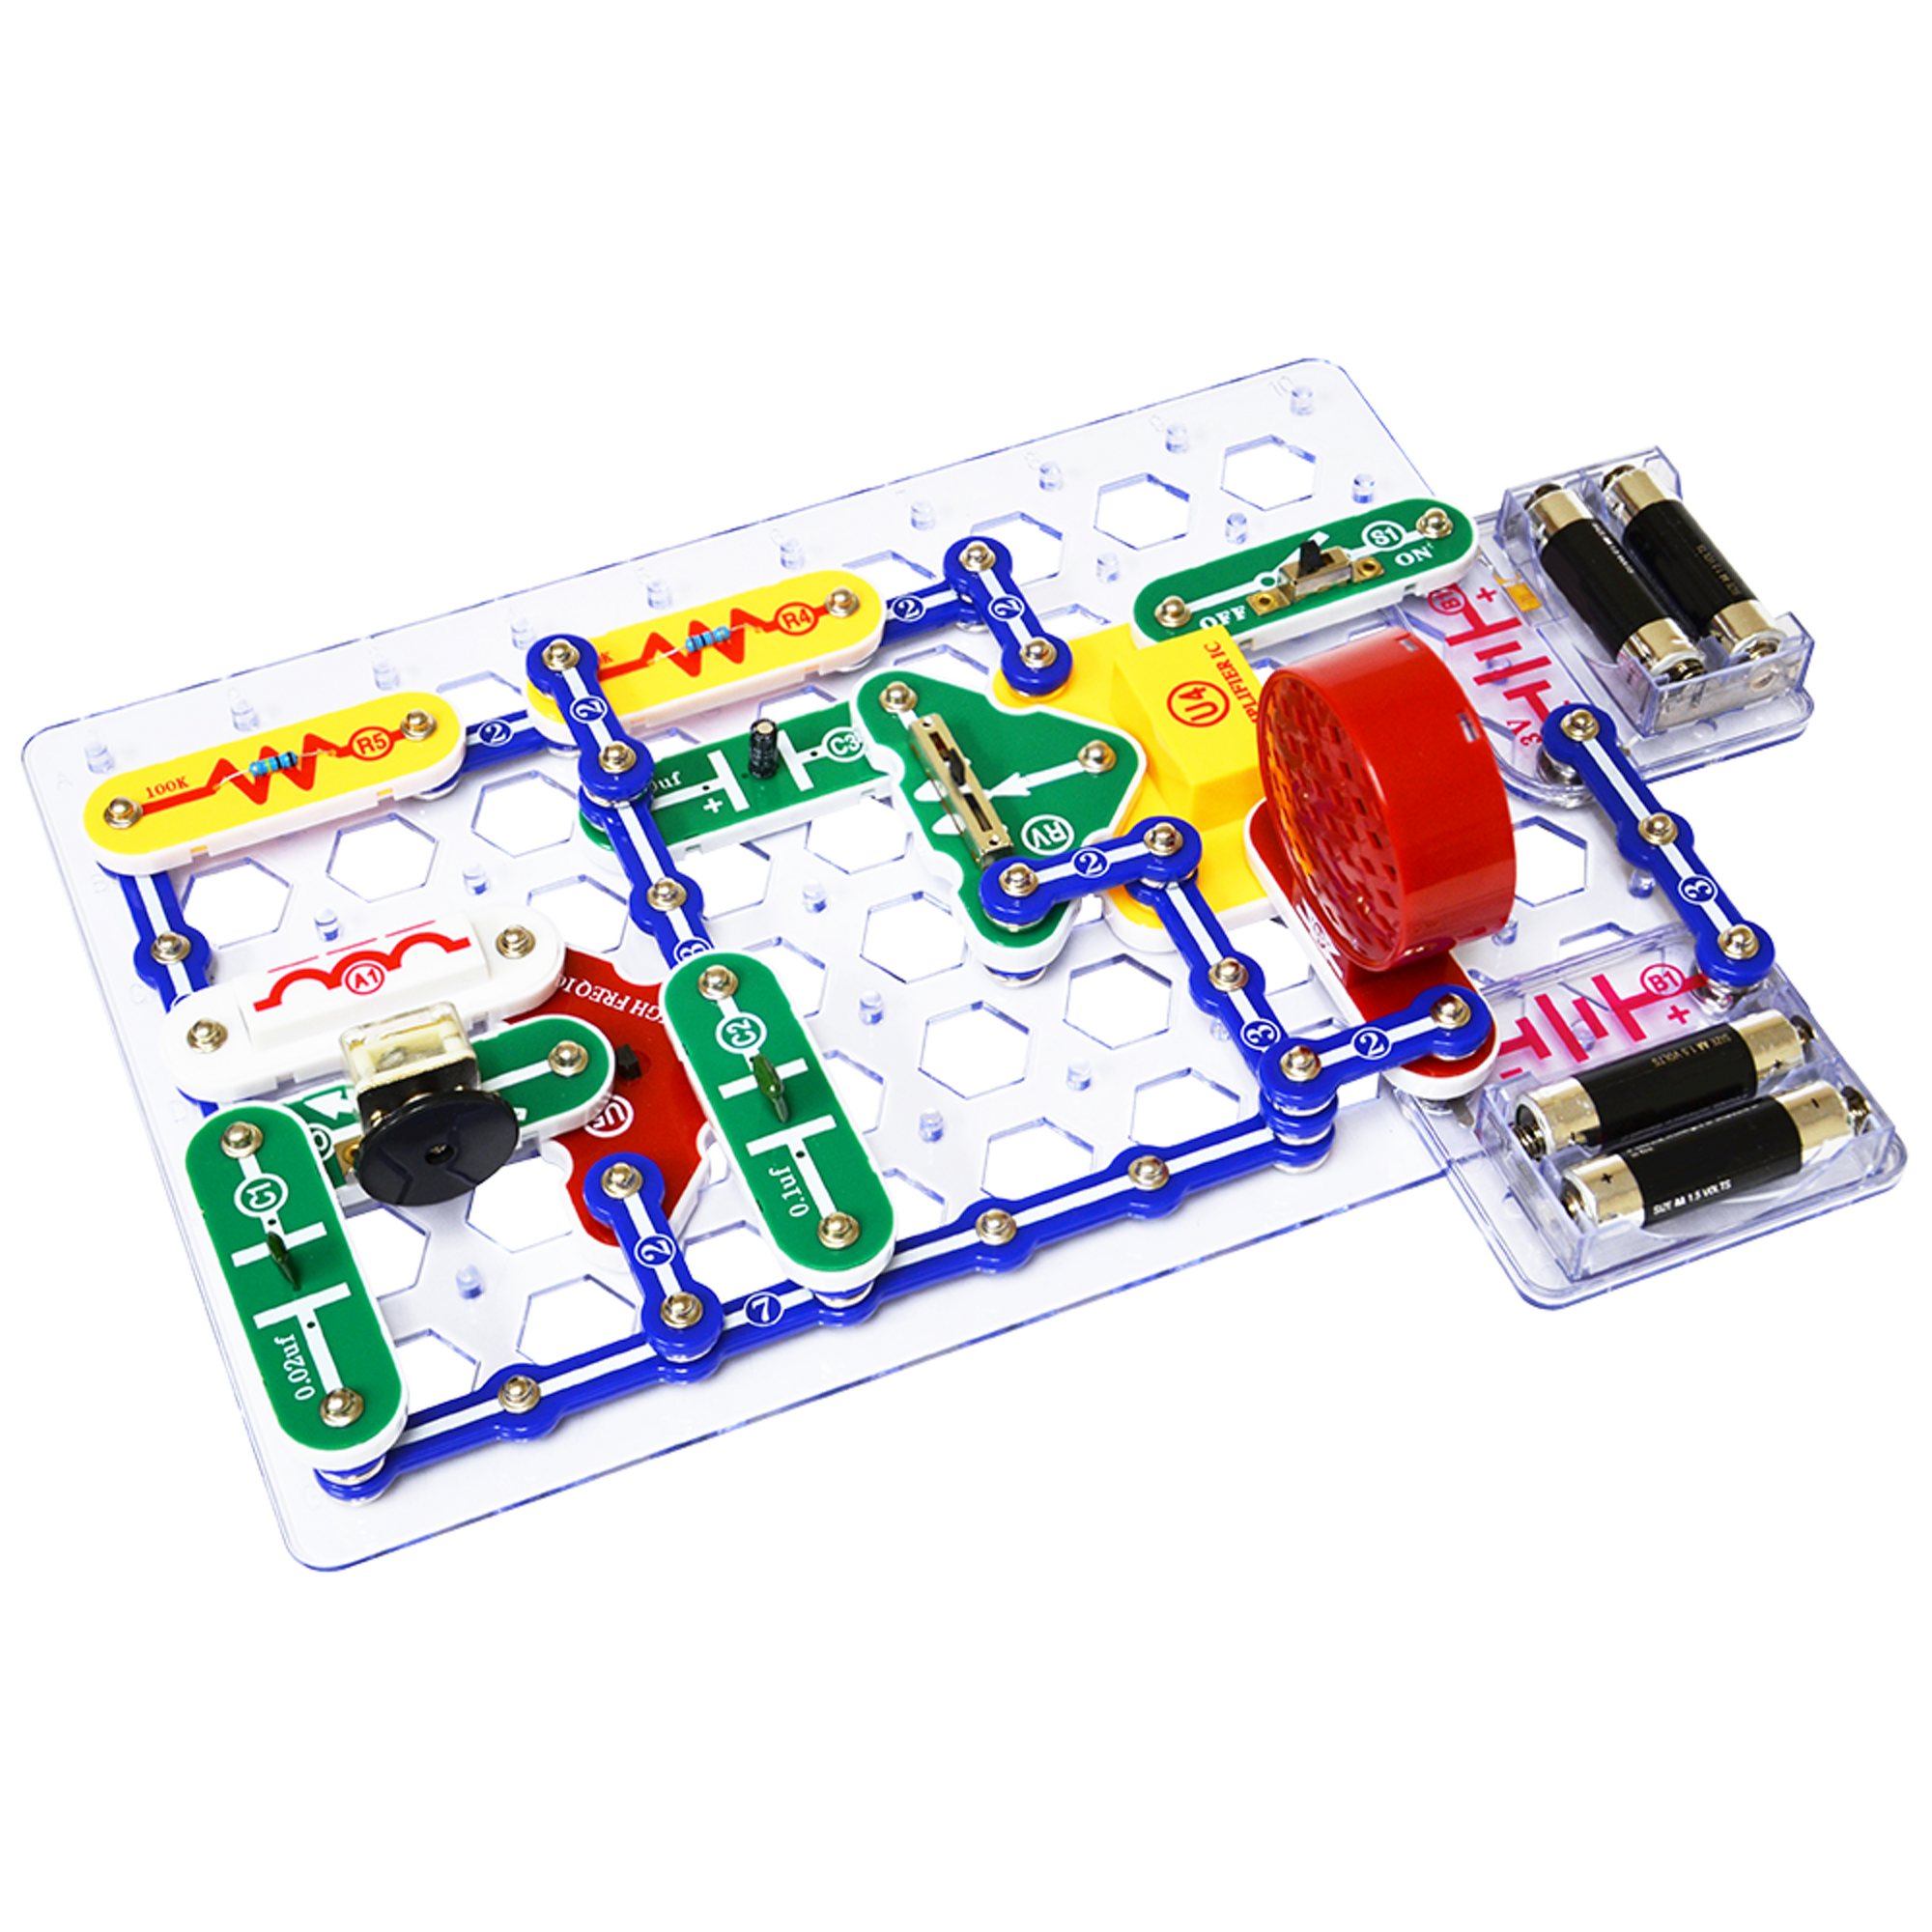 Snap Circuits 300 Project Kit